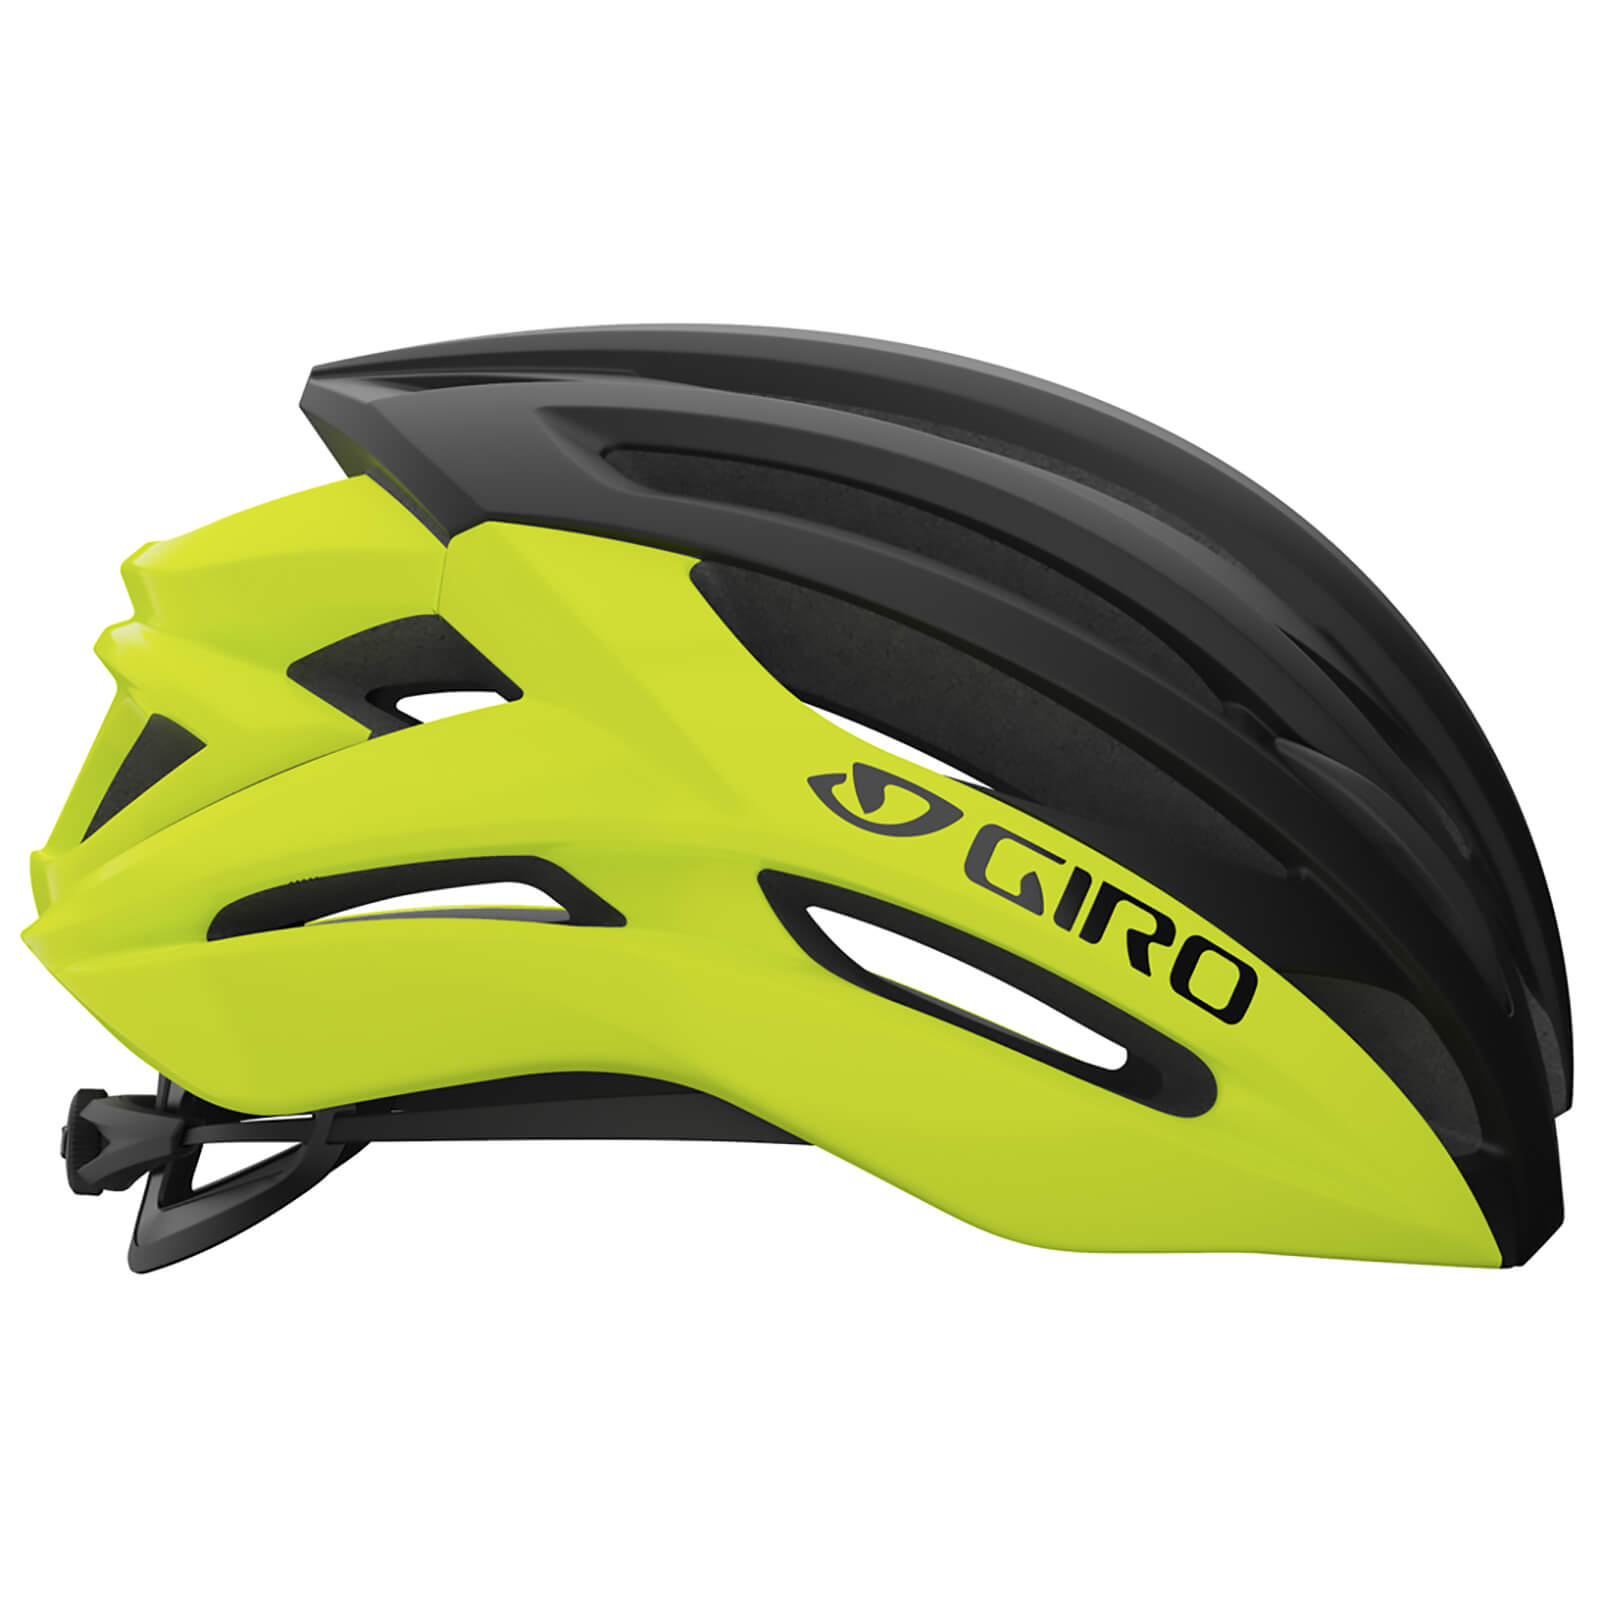 Giro Syntax Road Helmet - S/51-55cm - Matte White/Silver